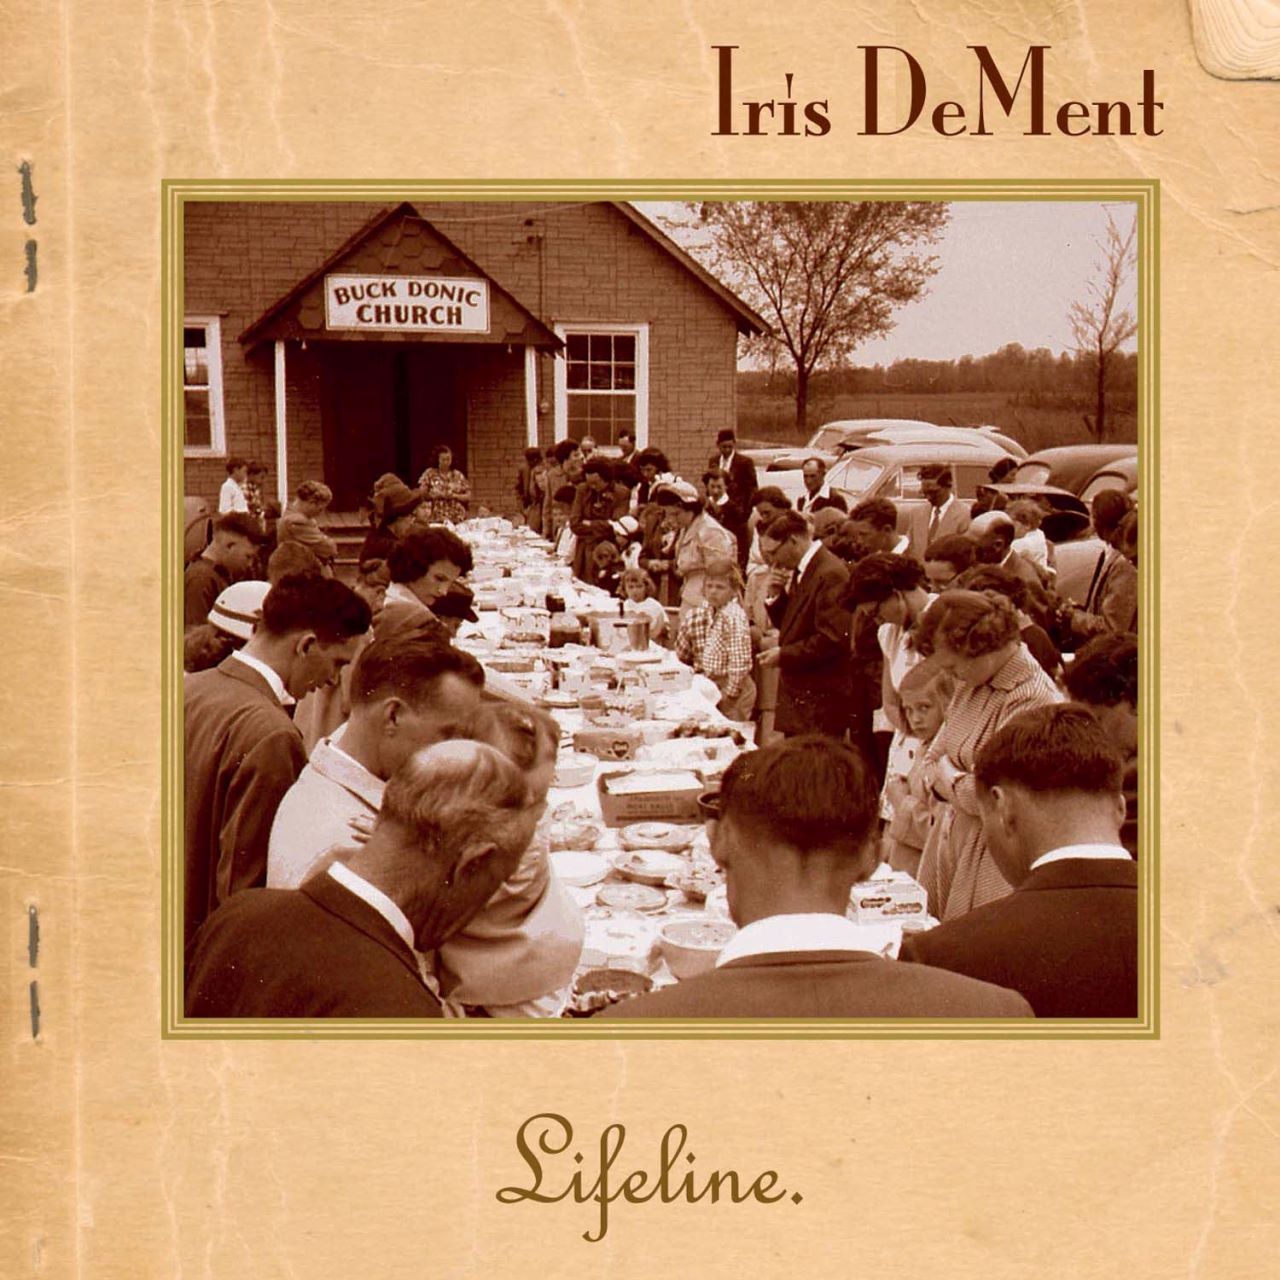 Iris DeMent – Lifeline cover album